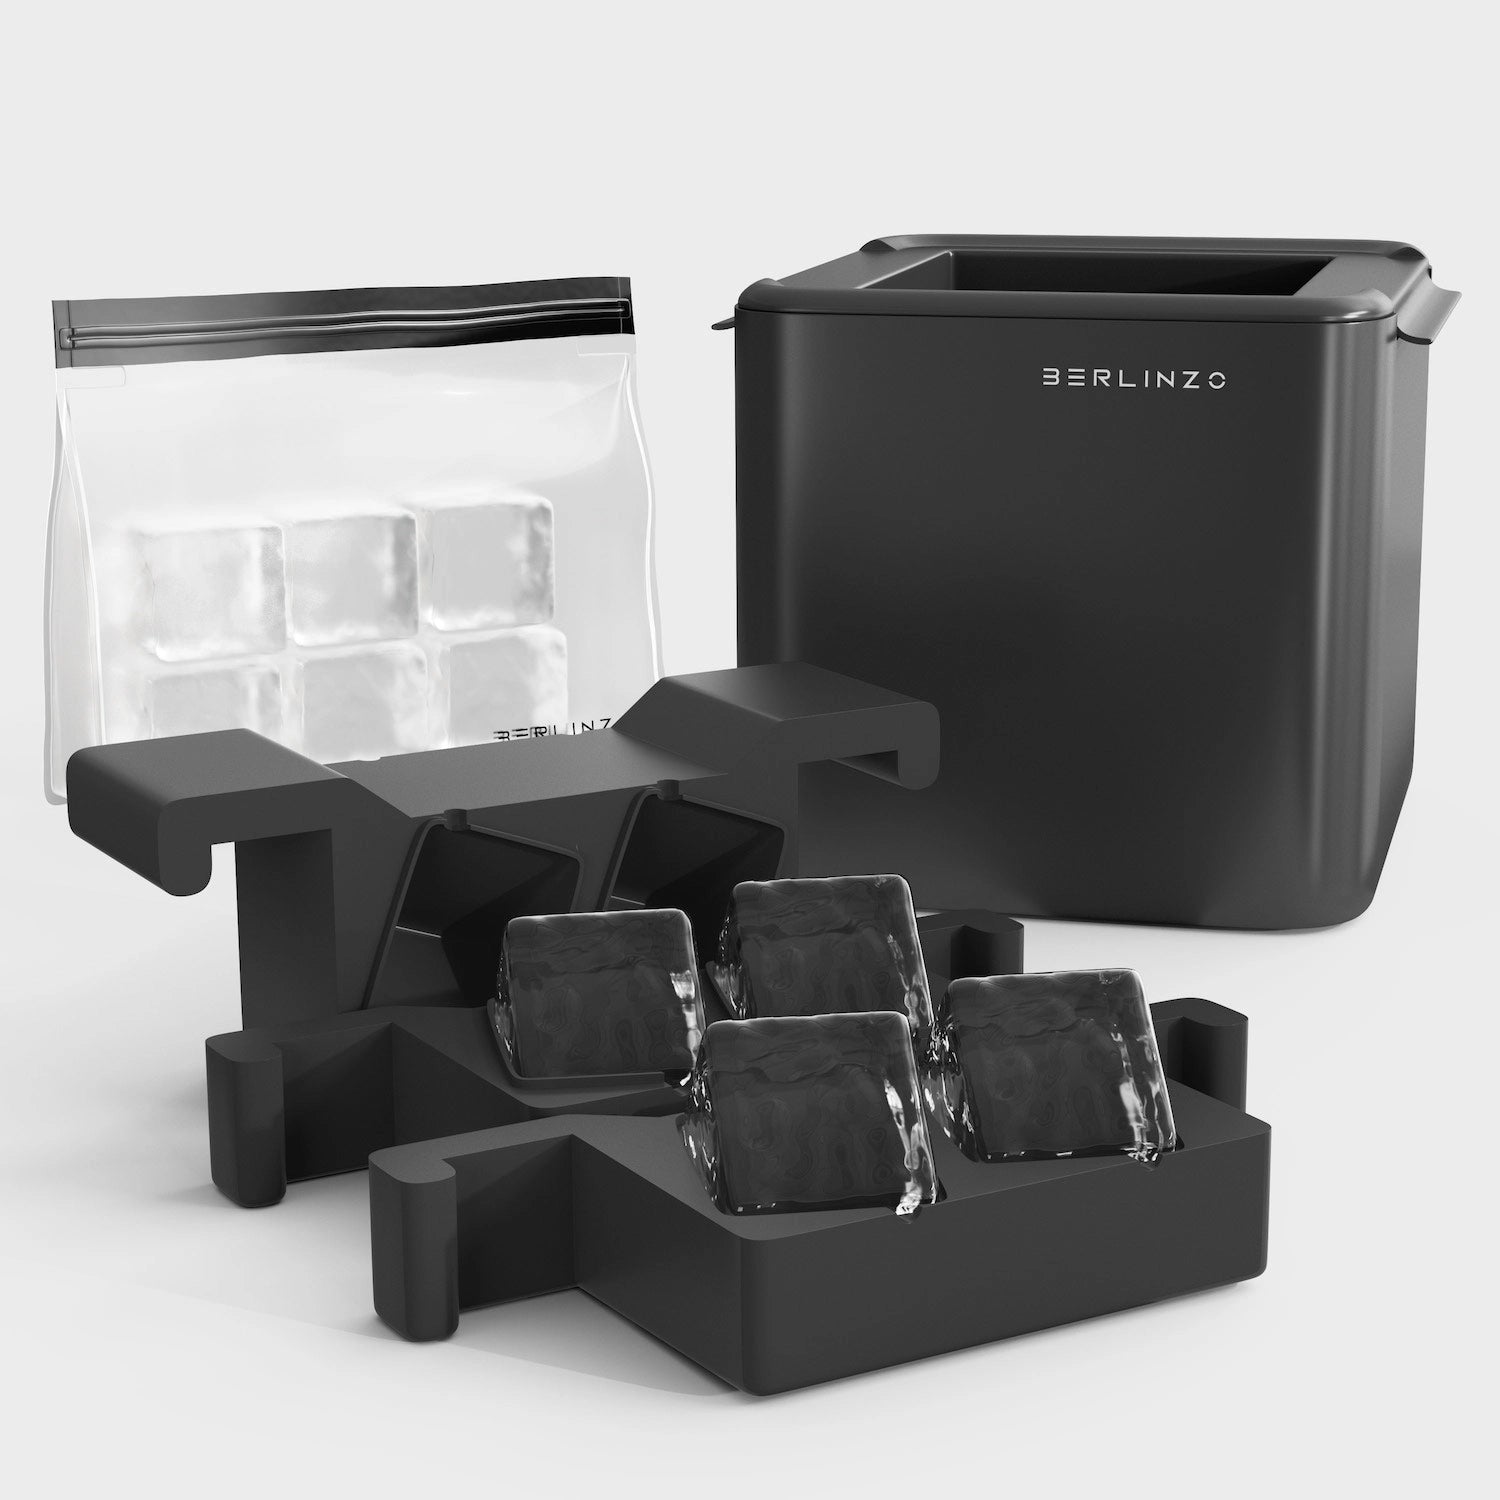 Premium Clear Ice 4 Cubes Maker